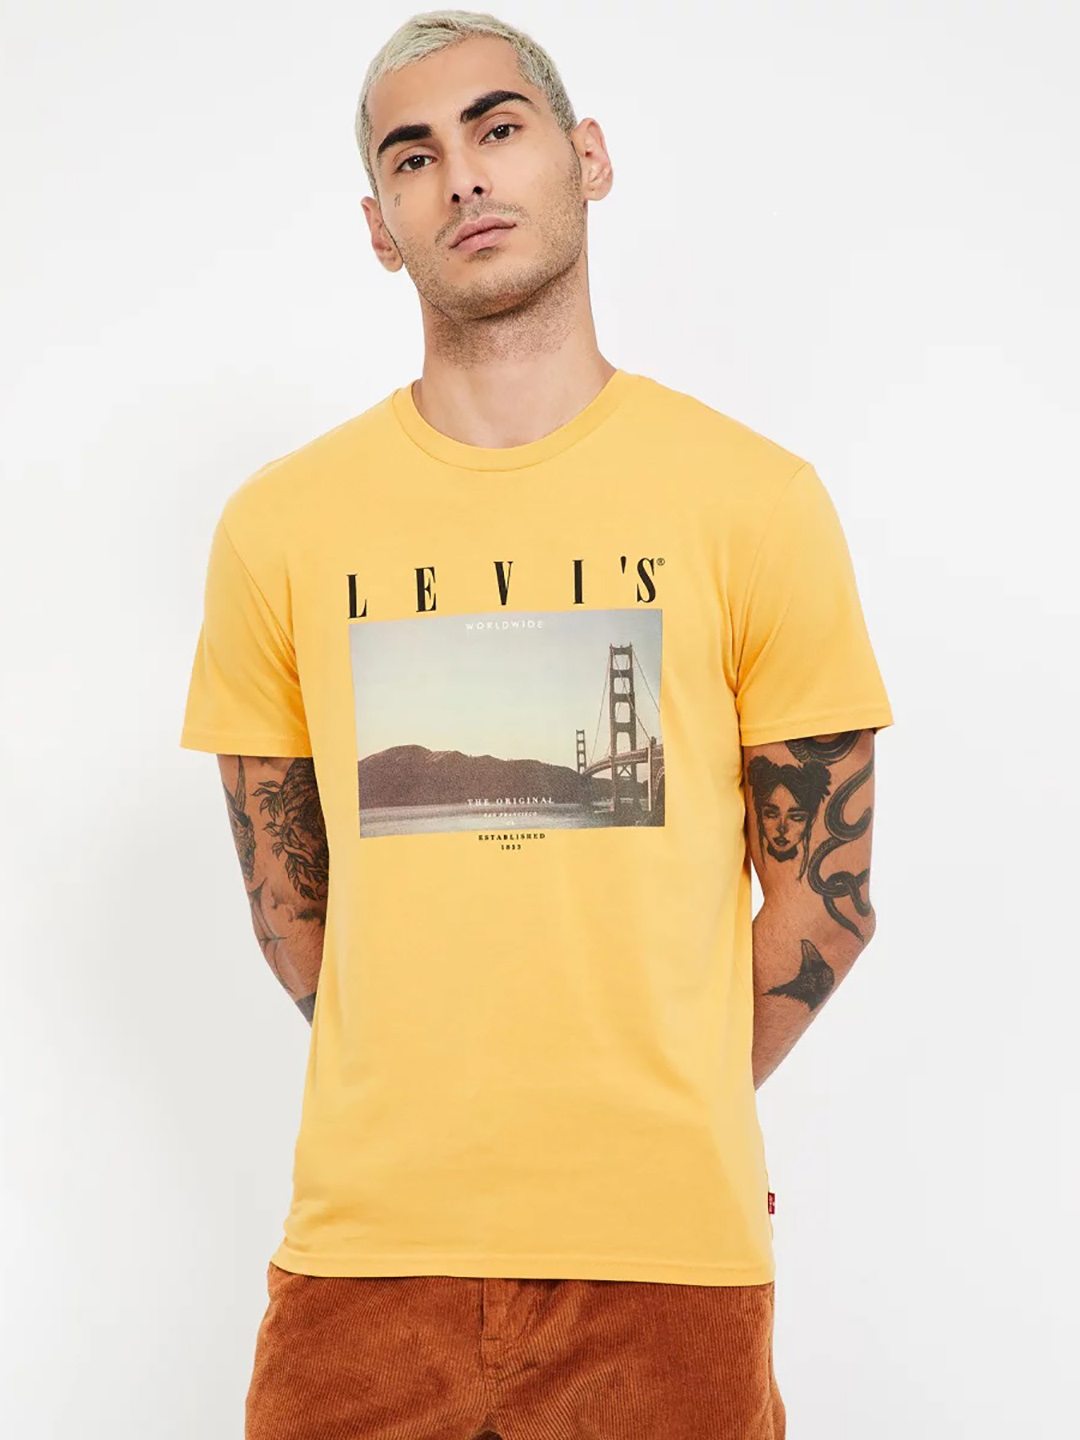 levis t shirt yellow